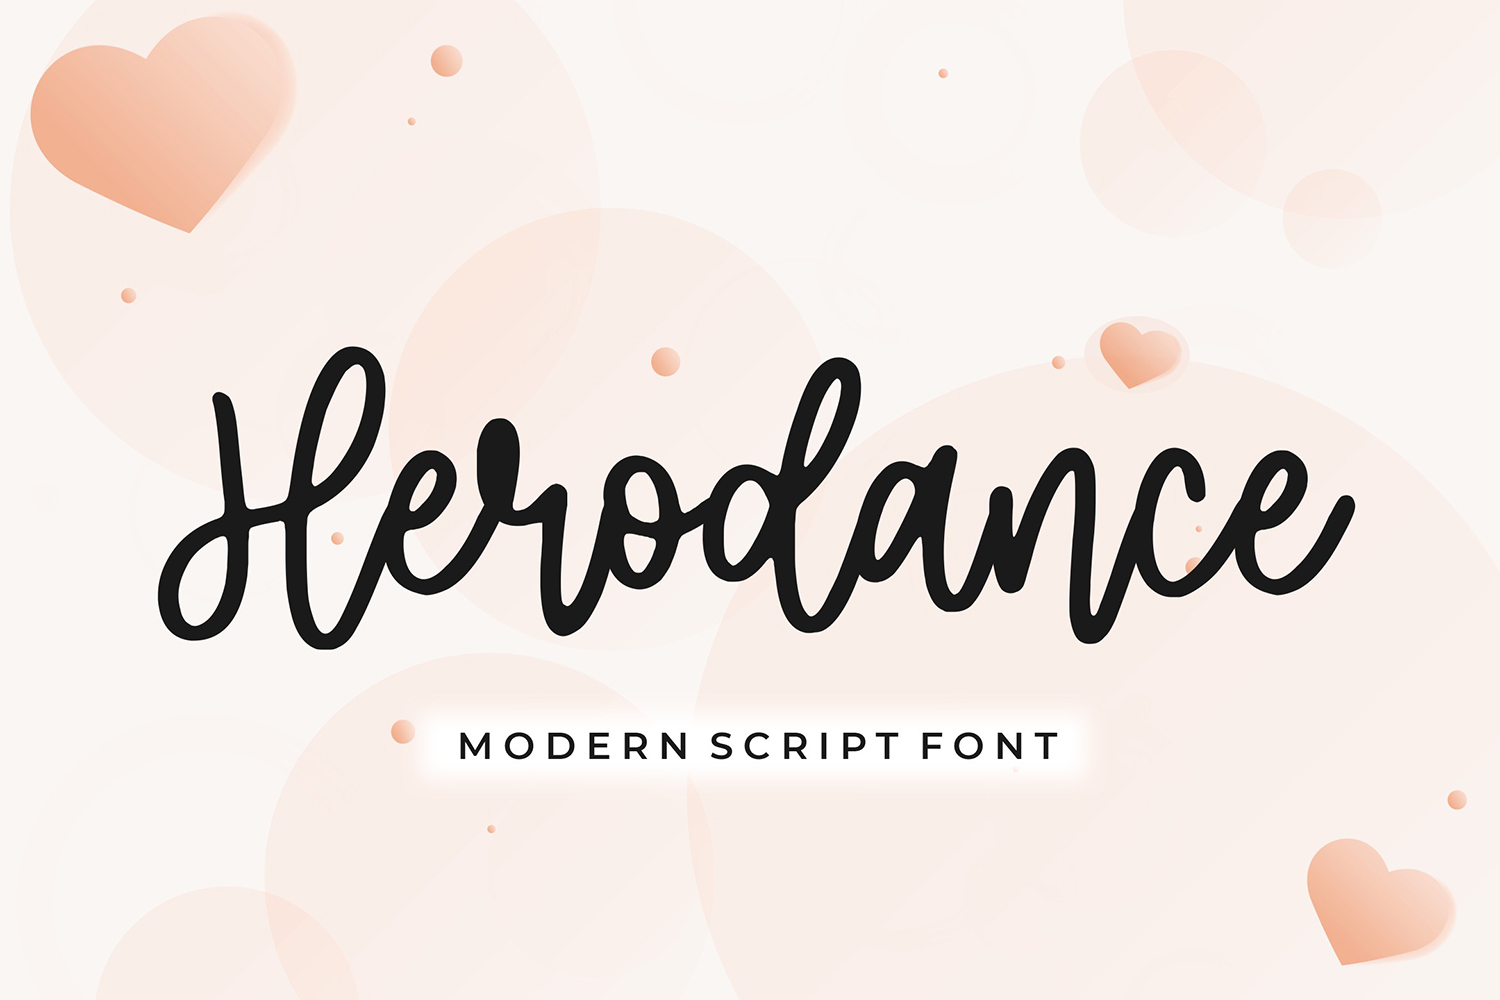 Herodance Free Font